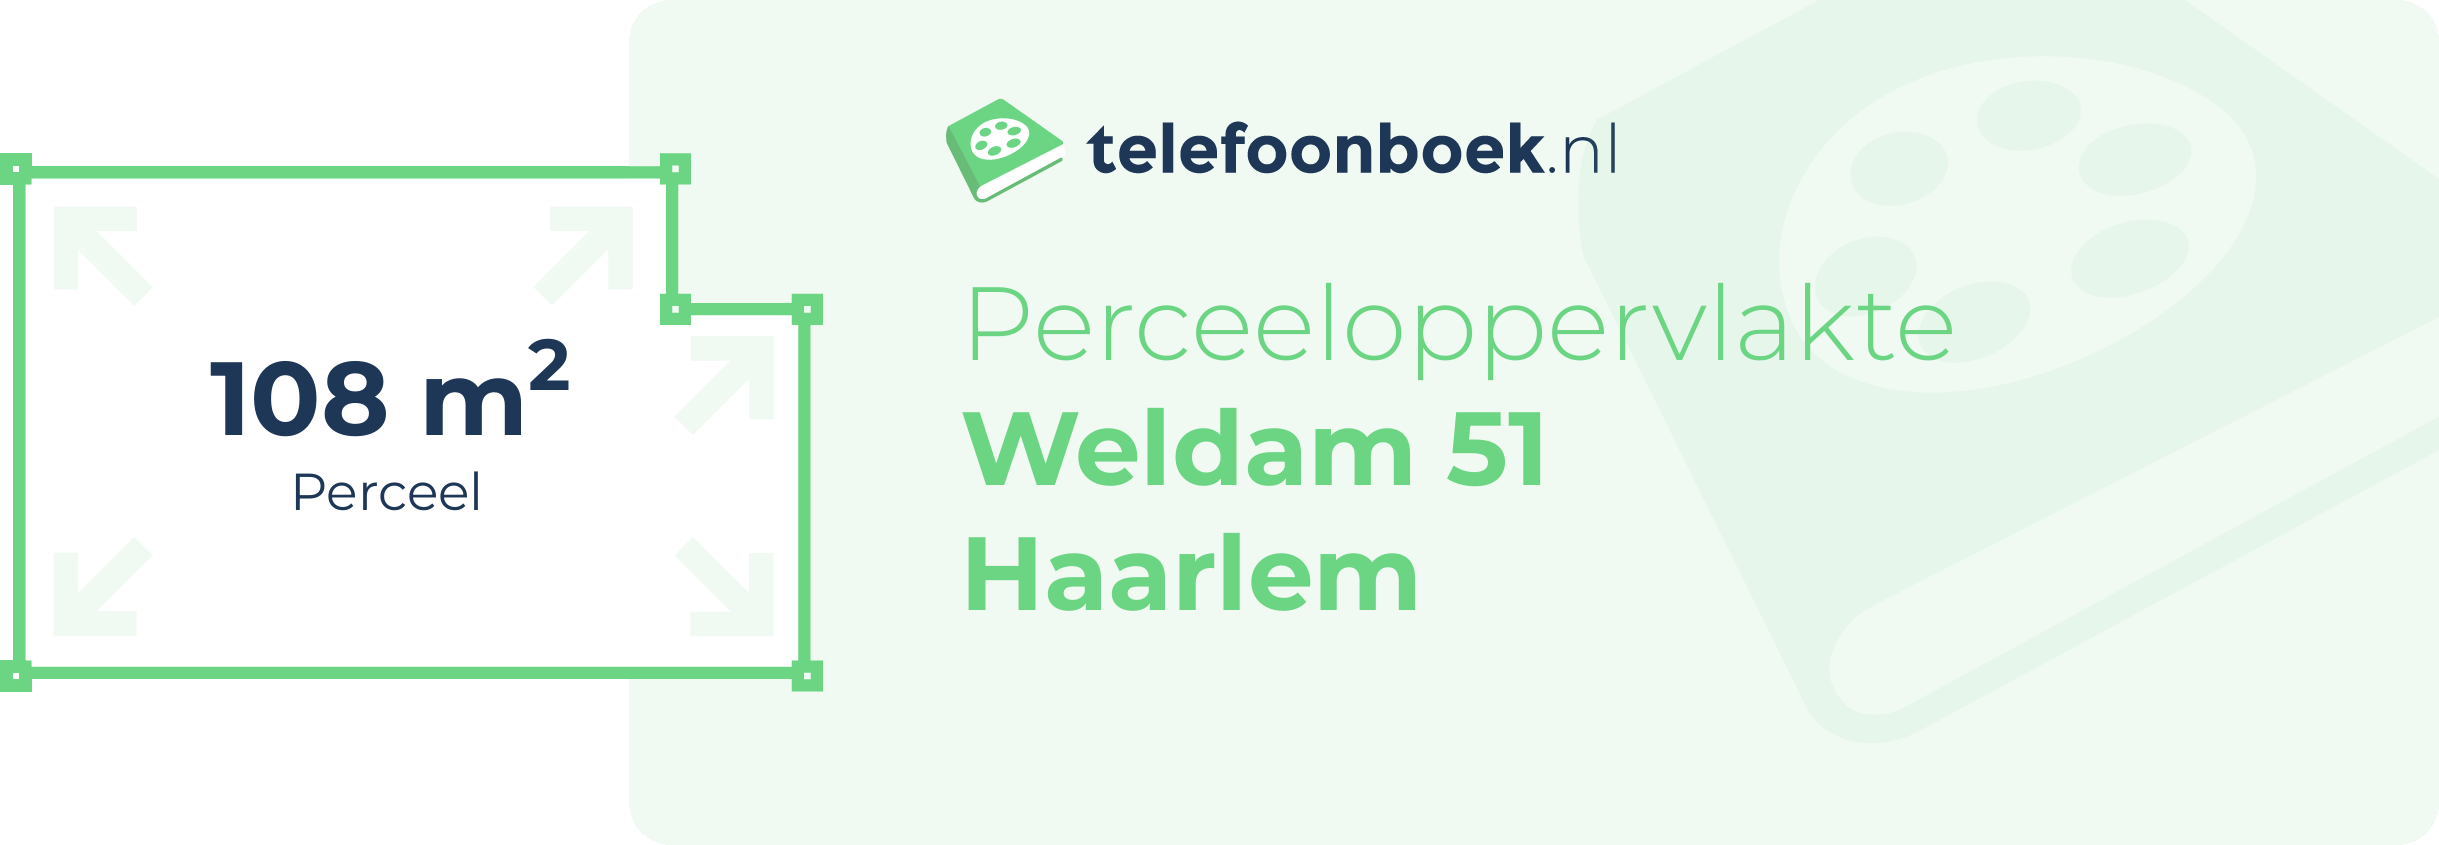 Perceeloppervlakte Weldam 51 Haarlem